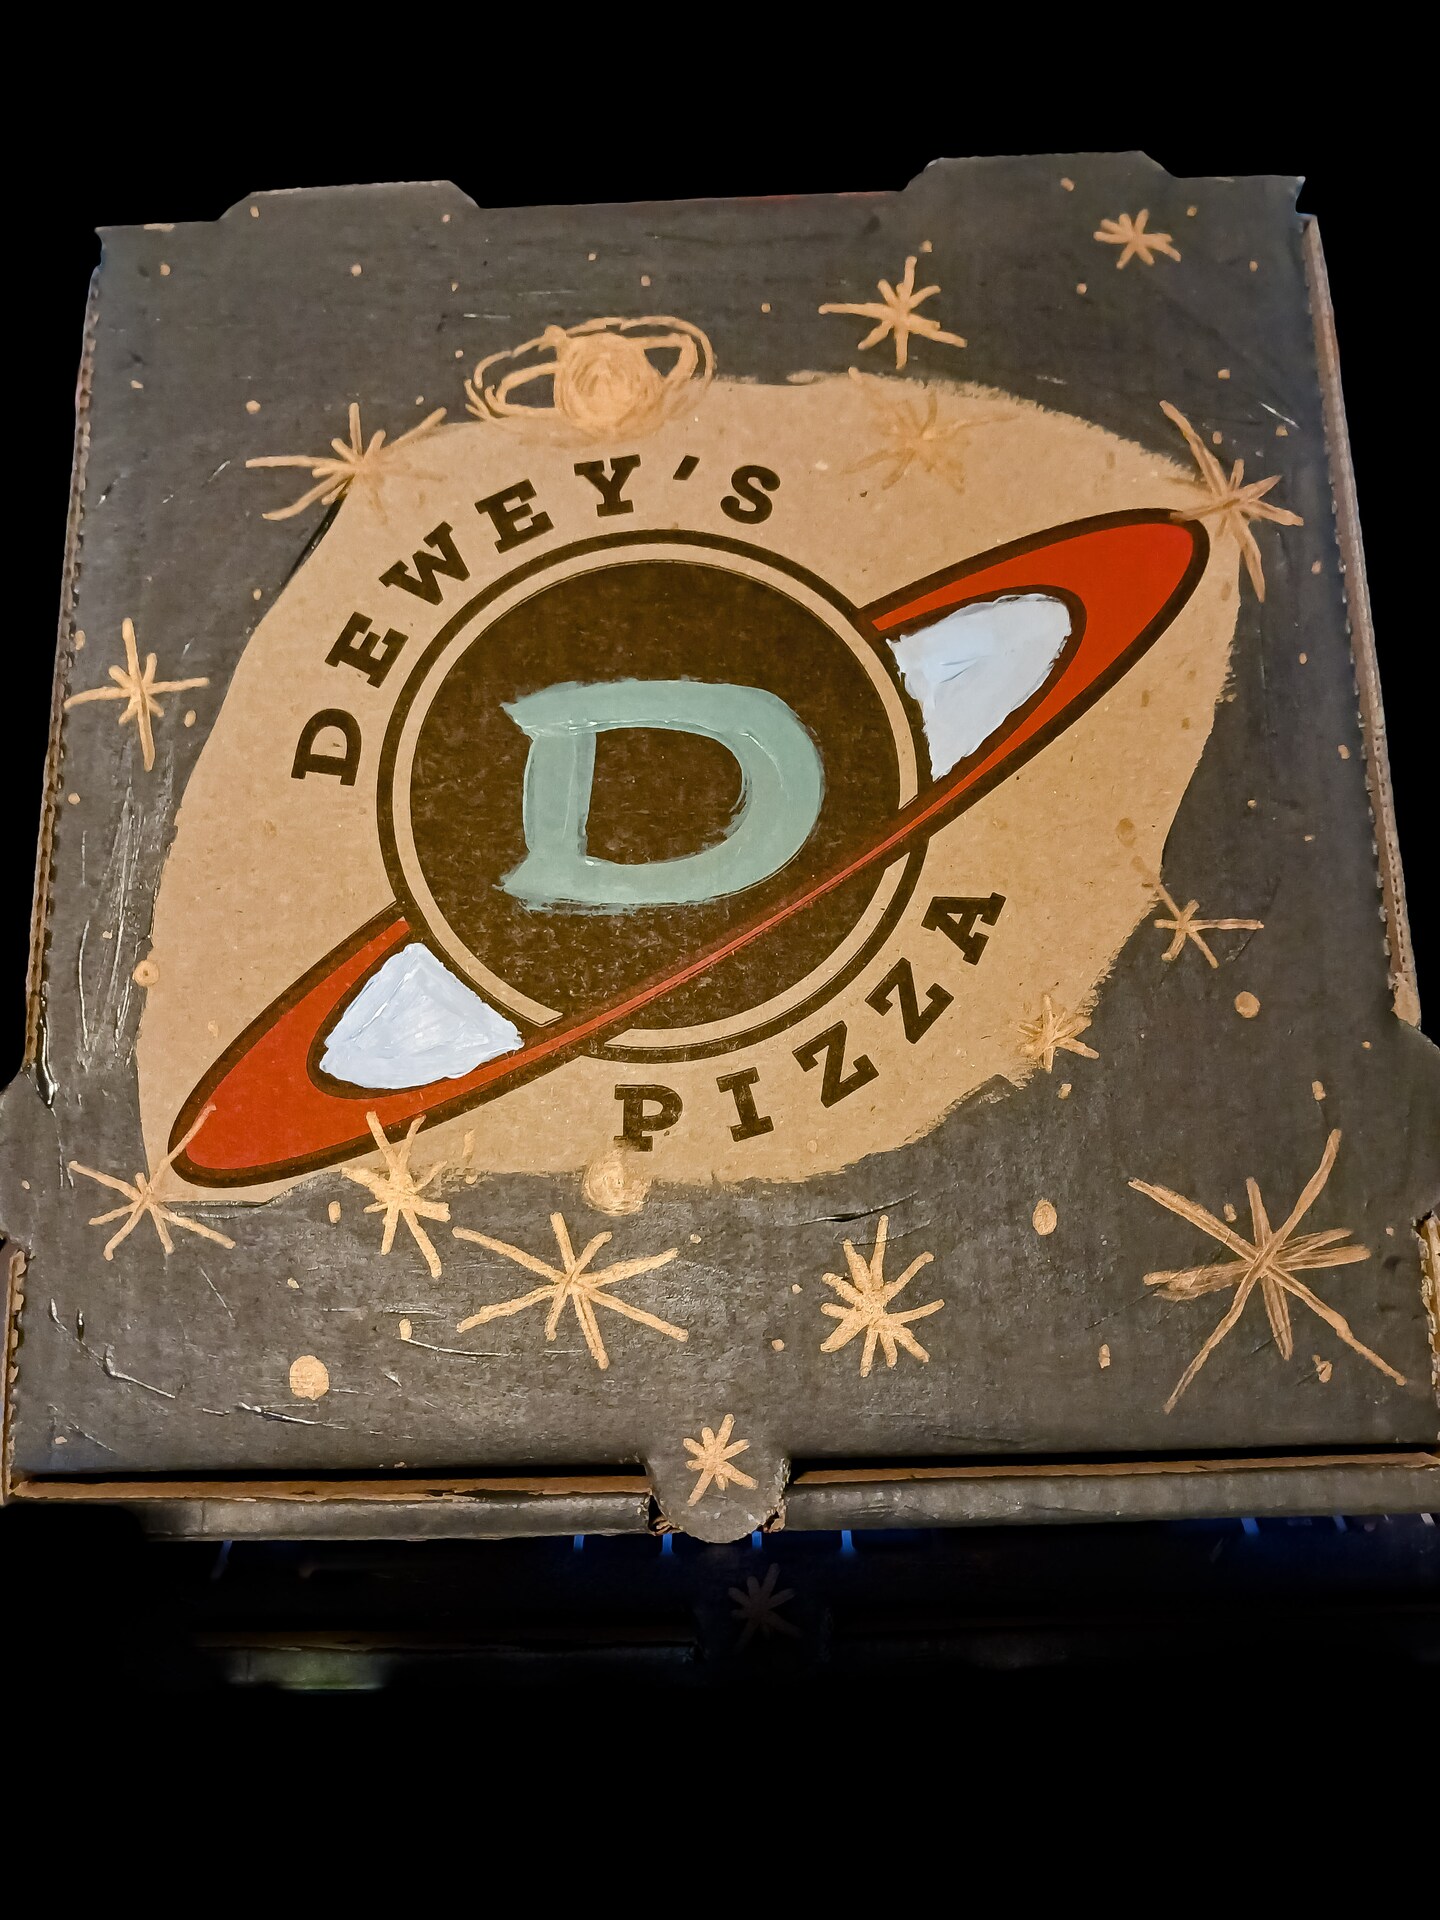 Copy-pizza box painting night